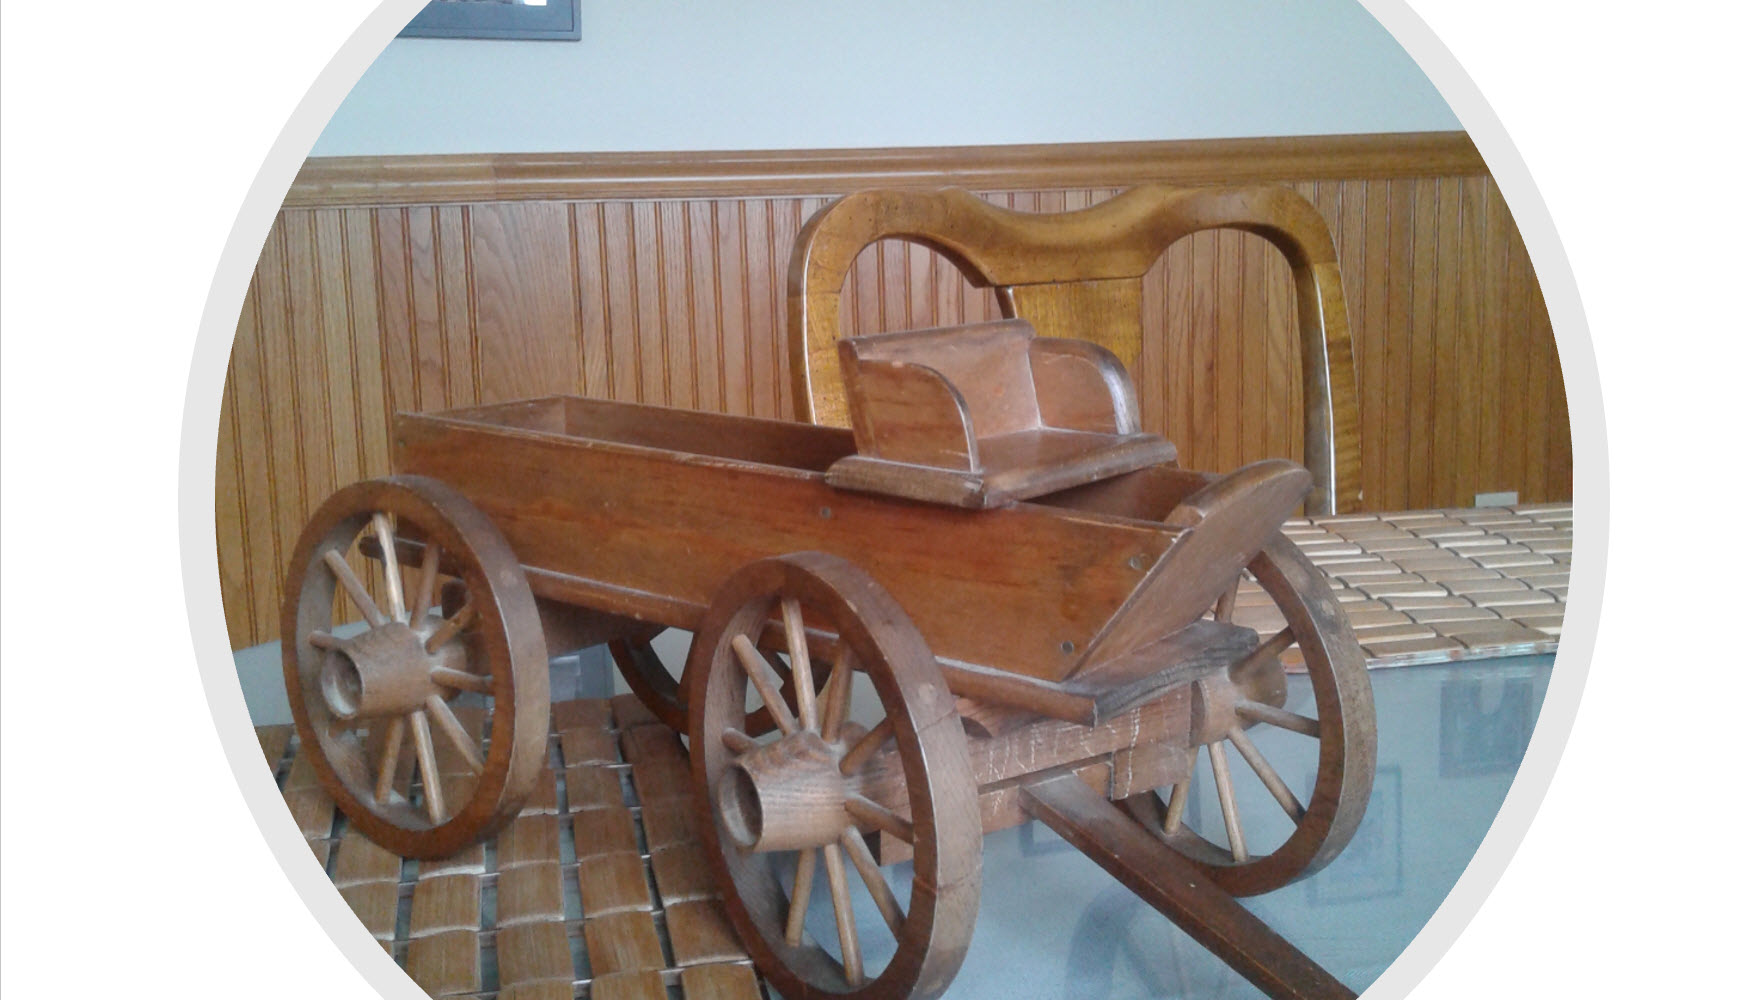 Replica of wagons made by Joseph Gelberg